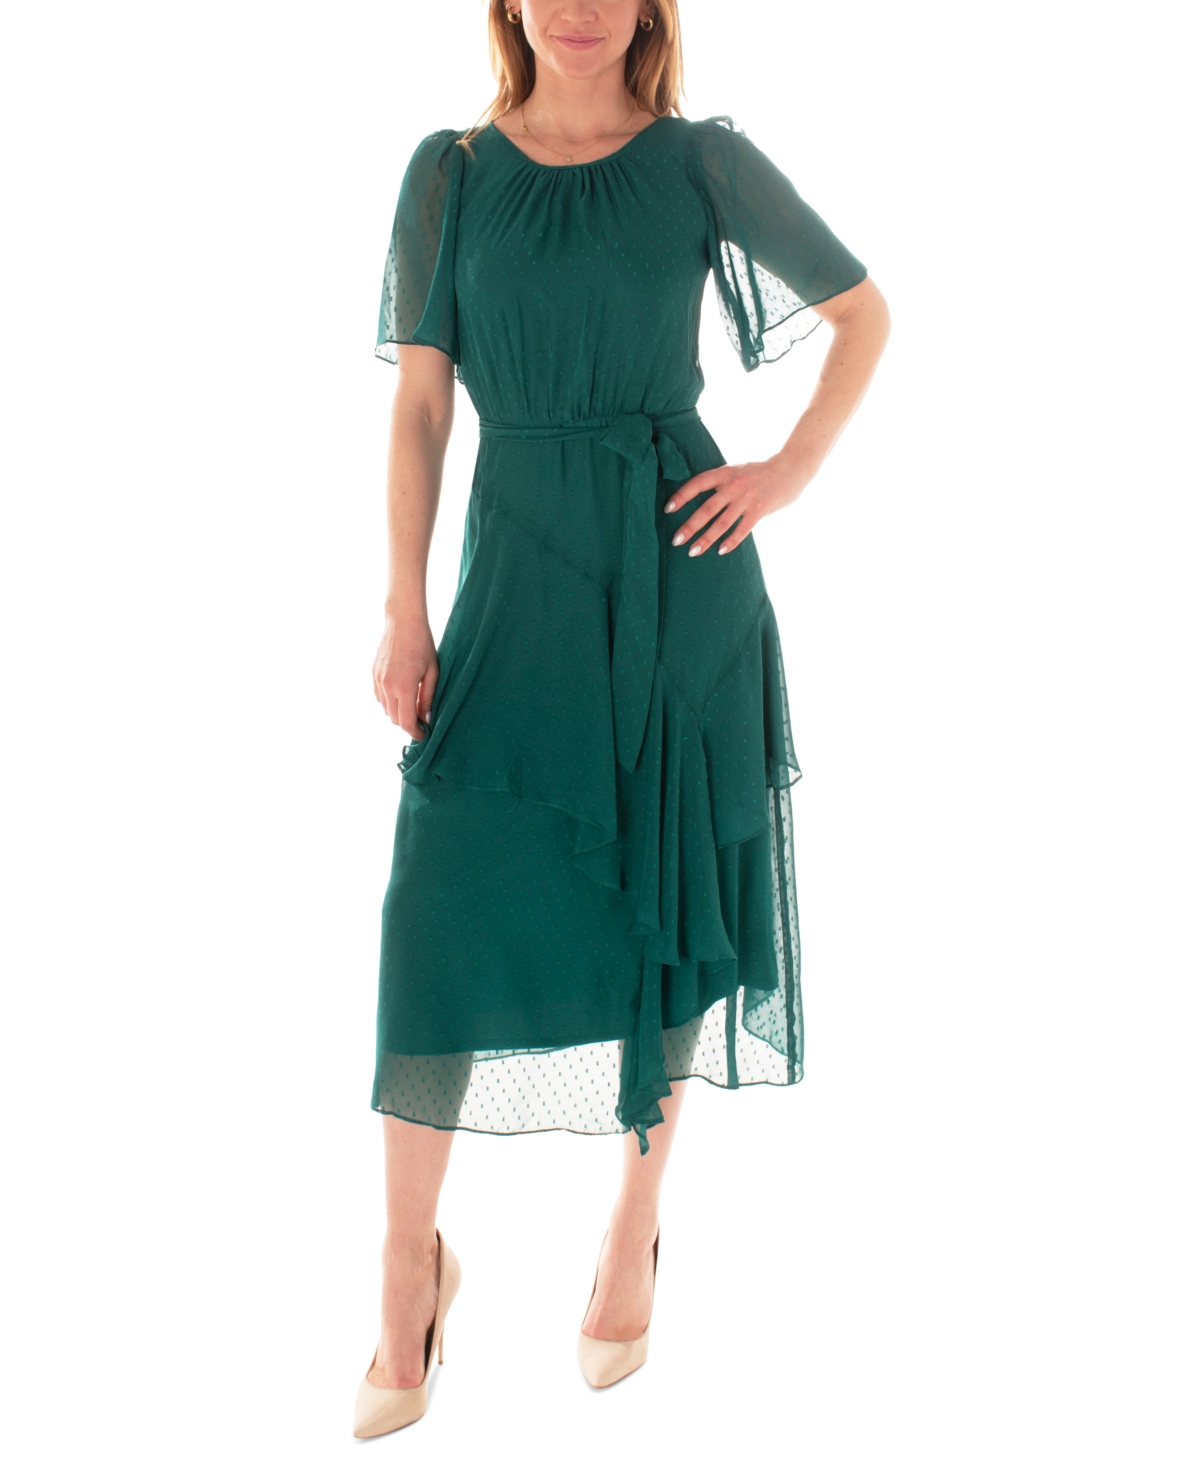 Women's Clip-Dot Fit & Flare Dress - Emerald